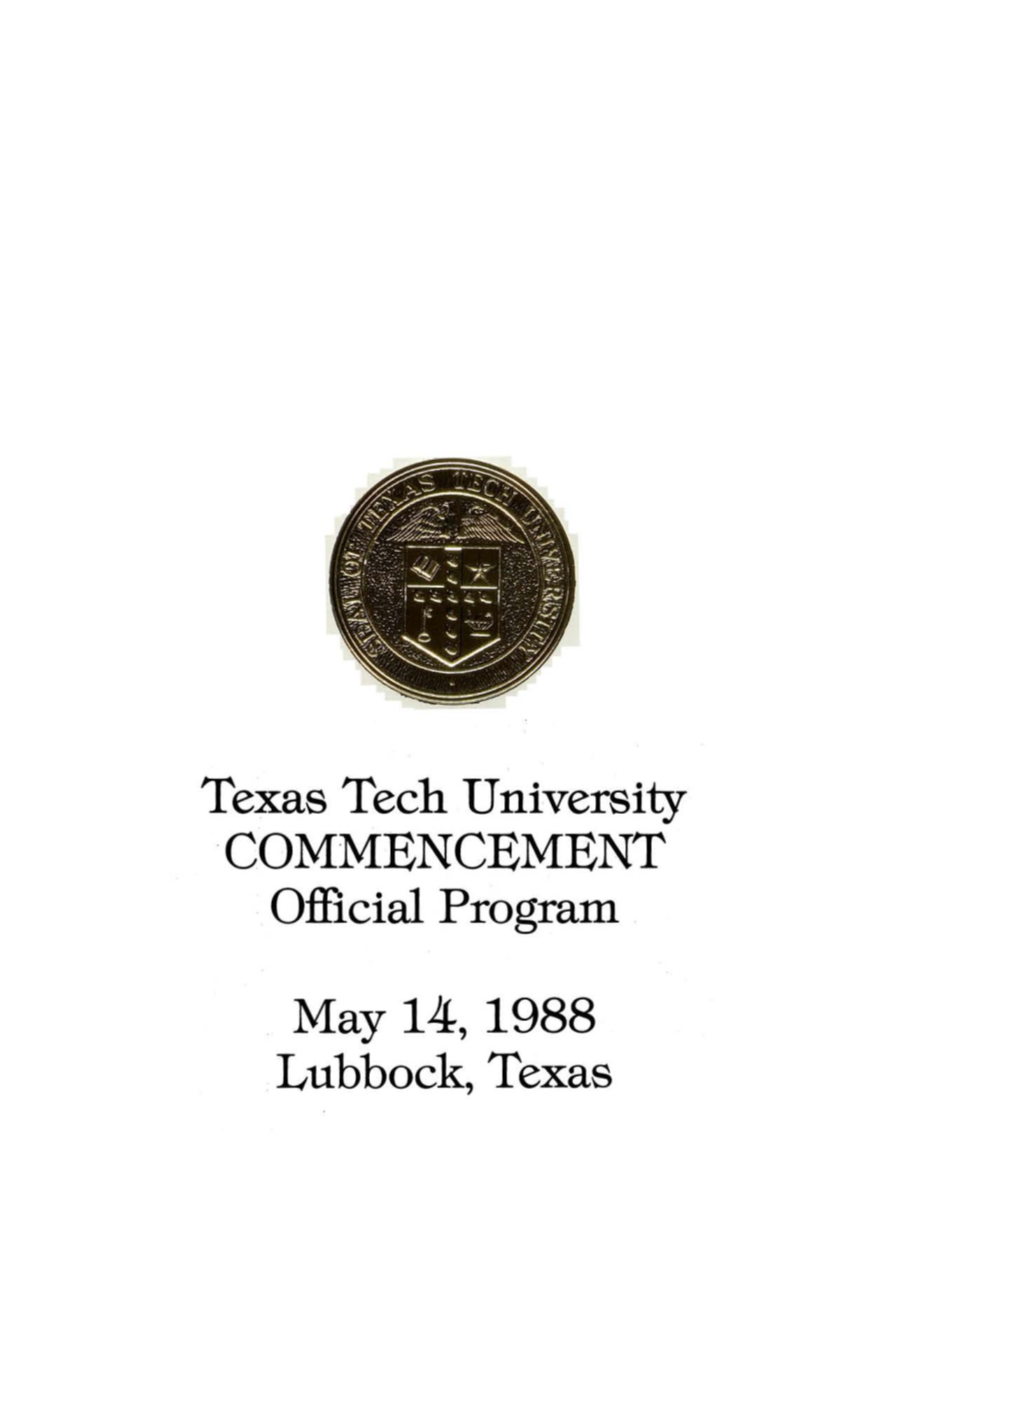 Texas Tech University Official Program Lubbock, Texas